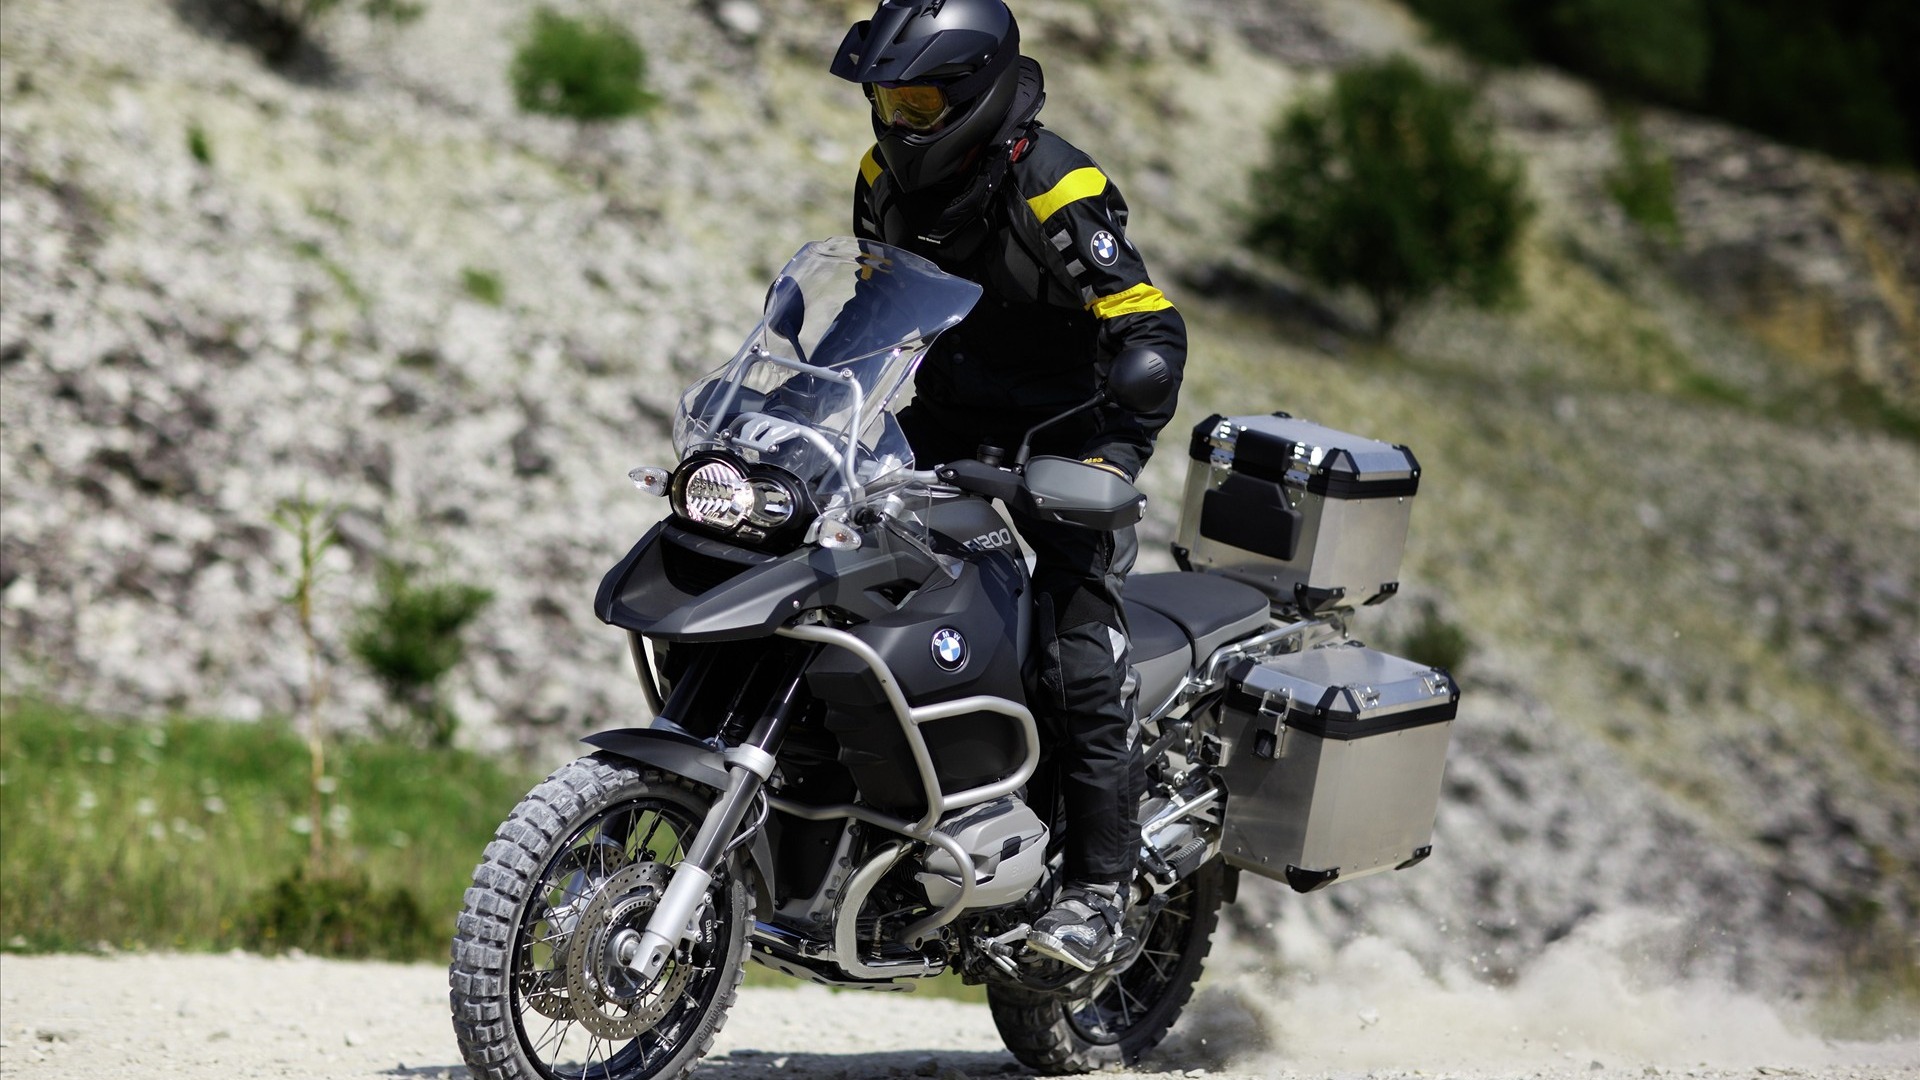 2010 fondos de pantalla de la motocicleta BMW #11 - 1920x1080